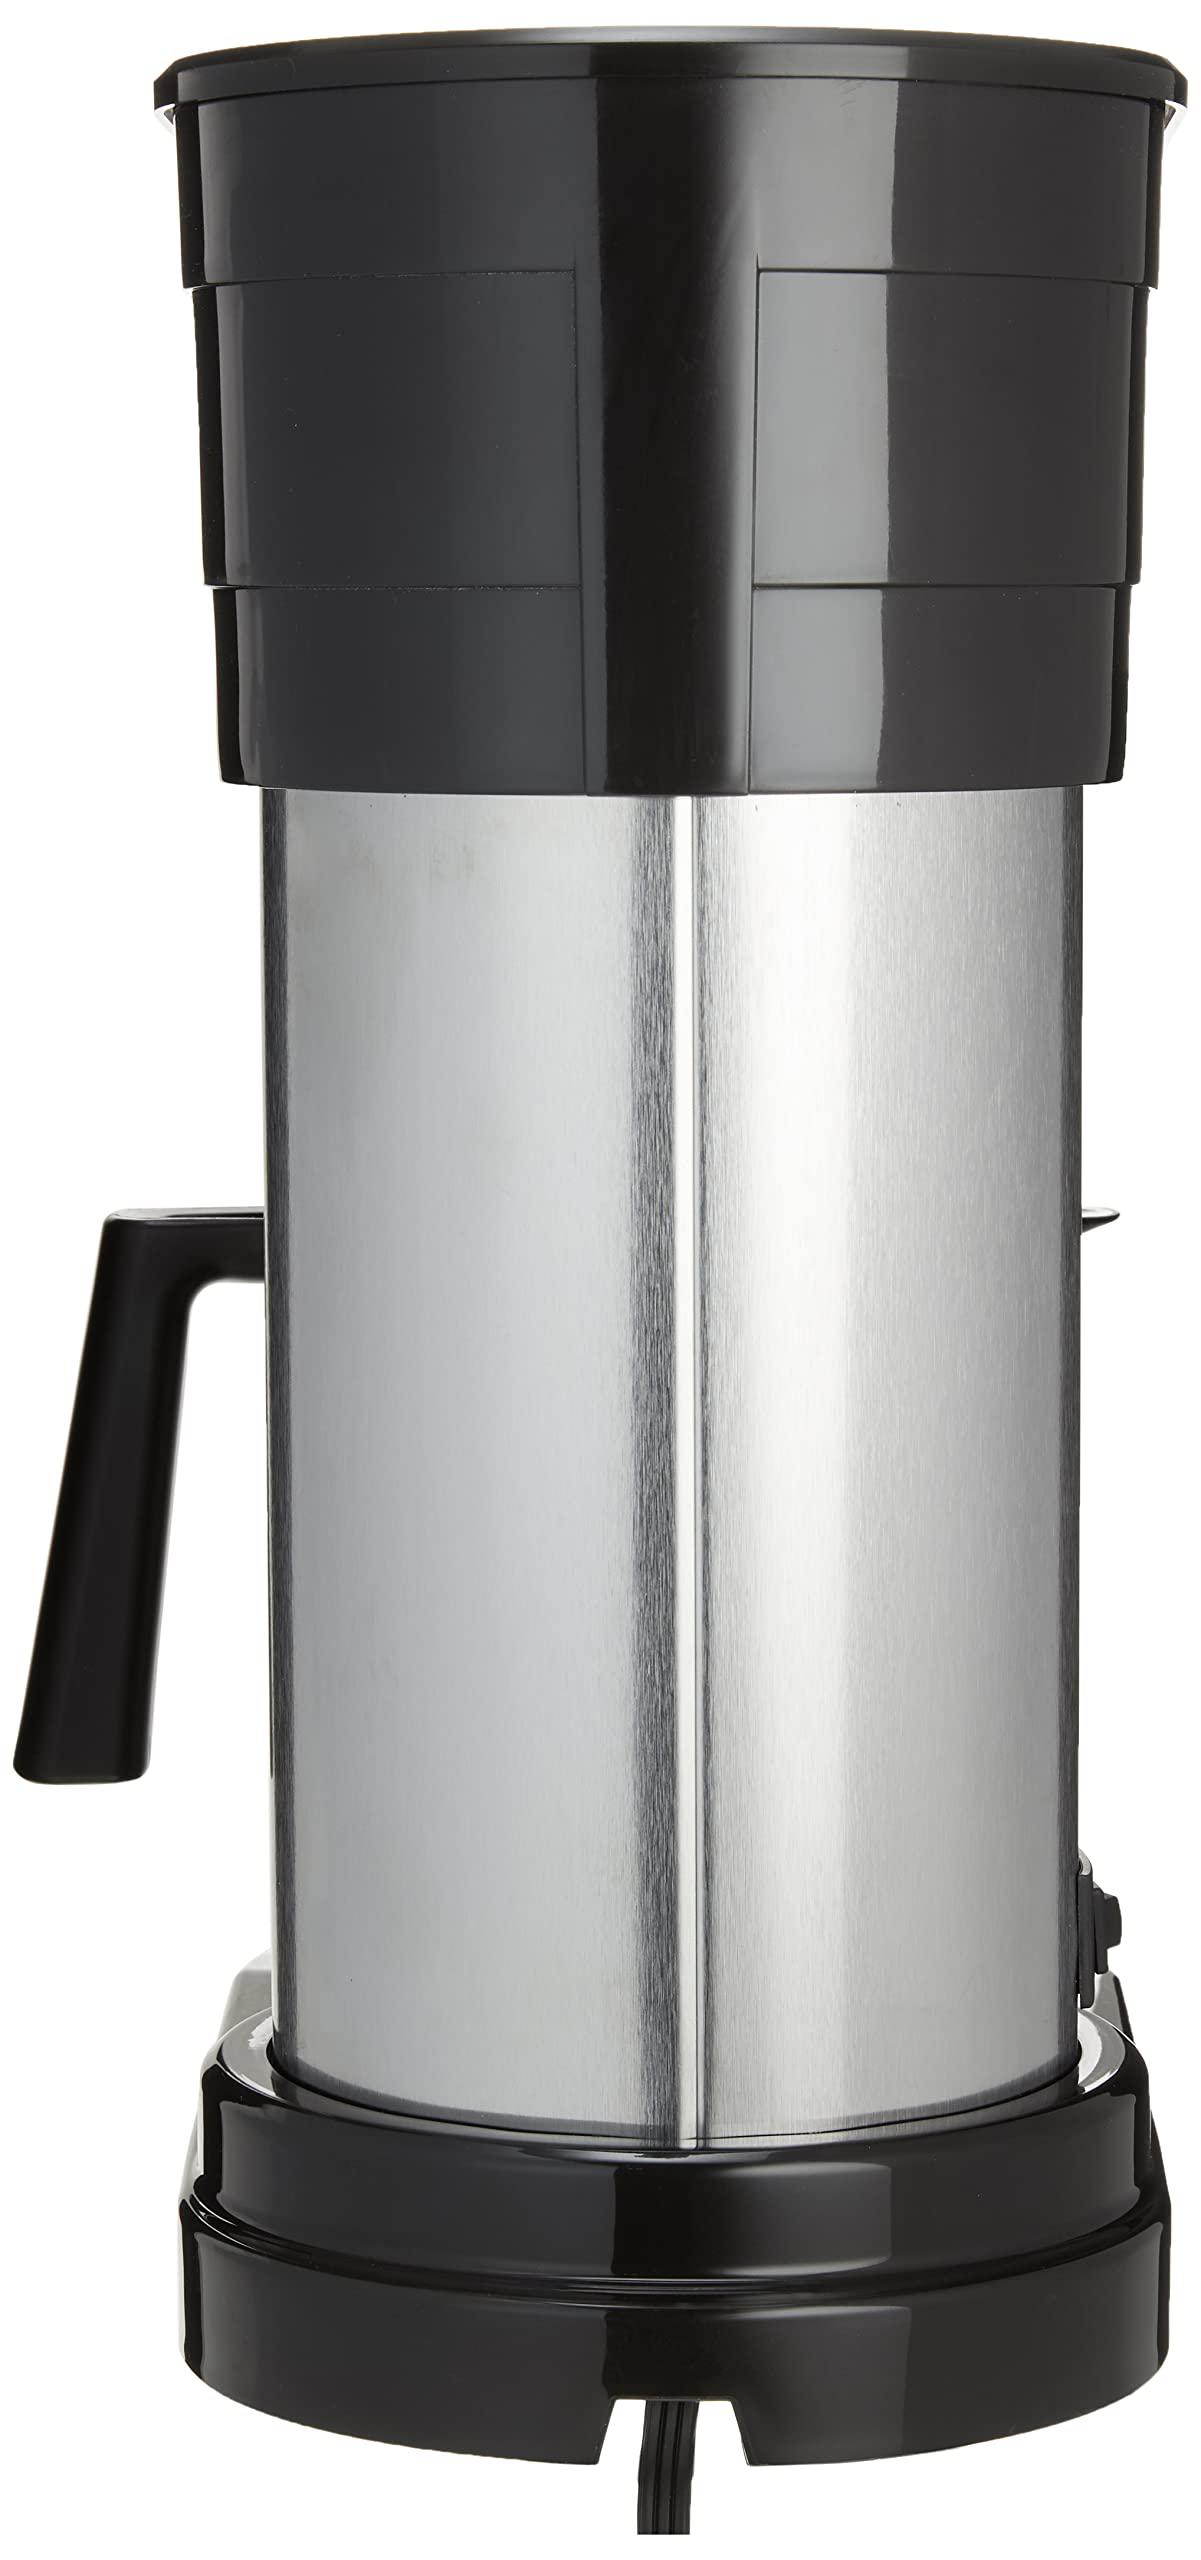 bunn bt bt speed brew 10-cup thermal carafe home coffee brewer, black